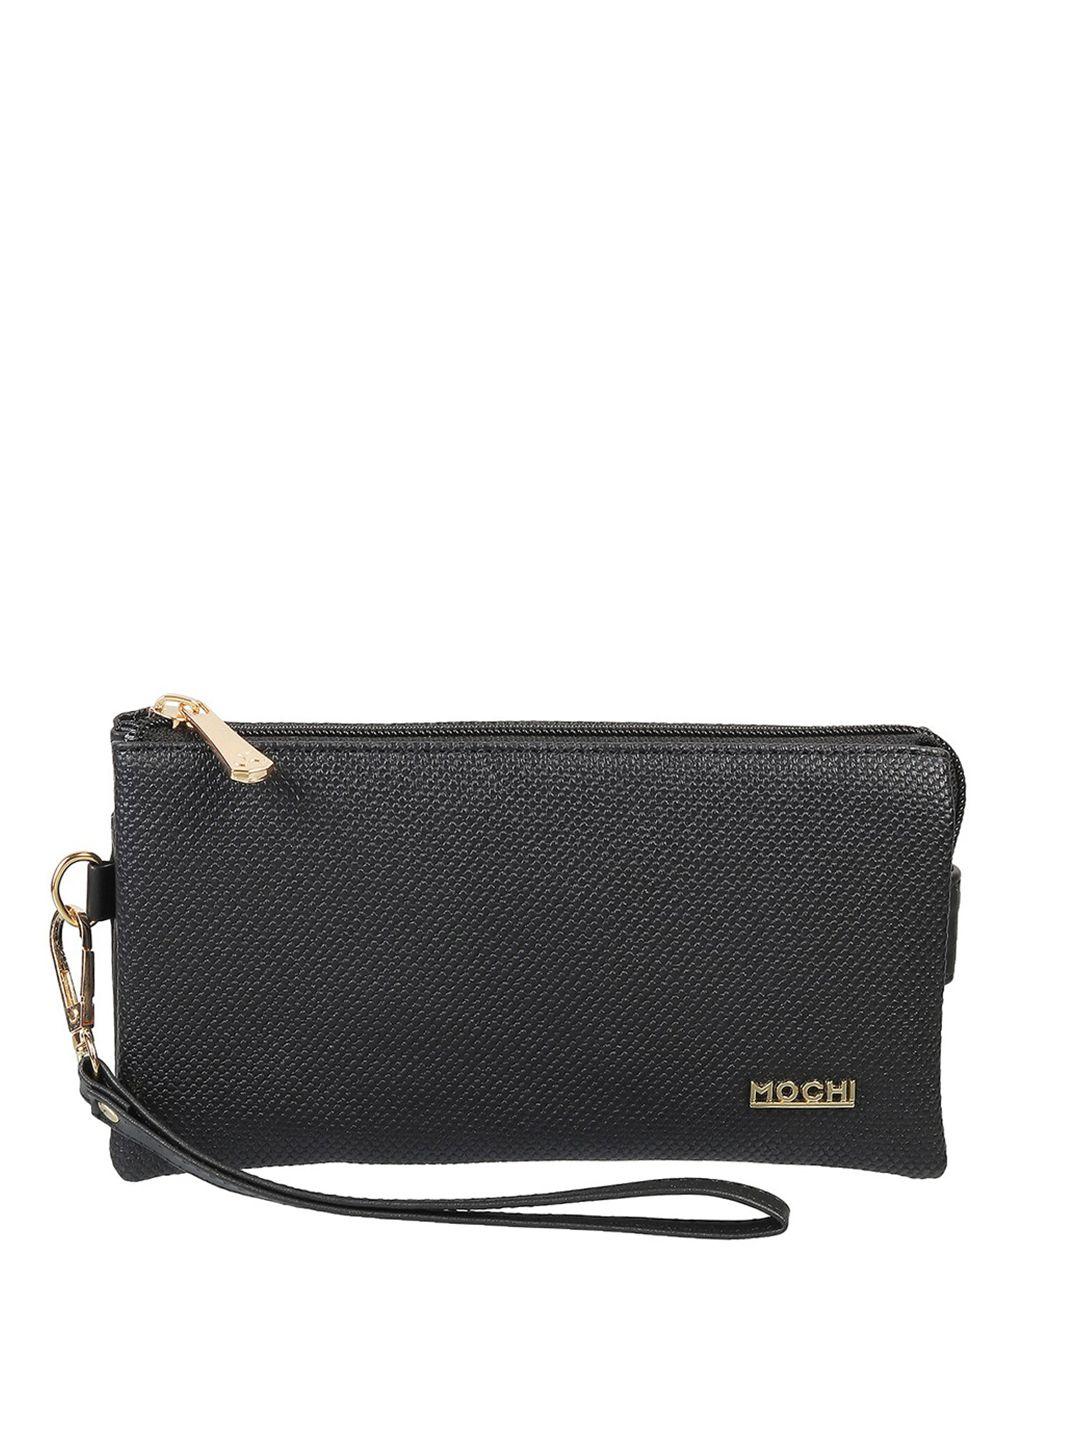 mochi black purse clutch